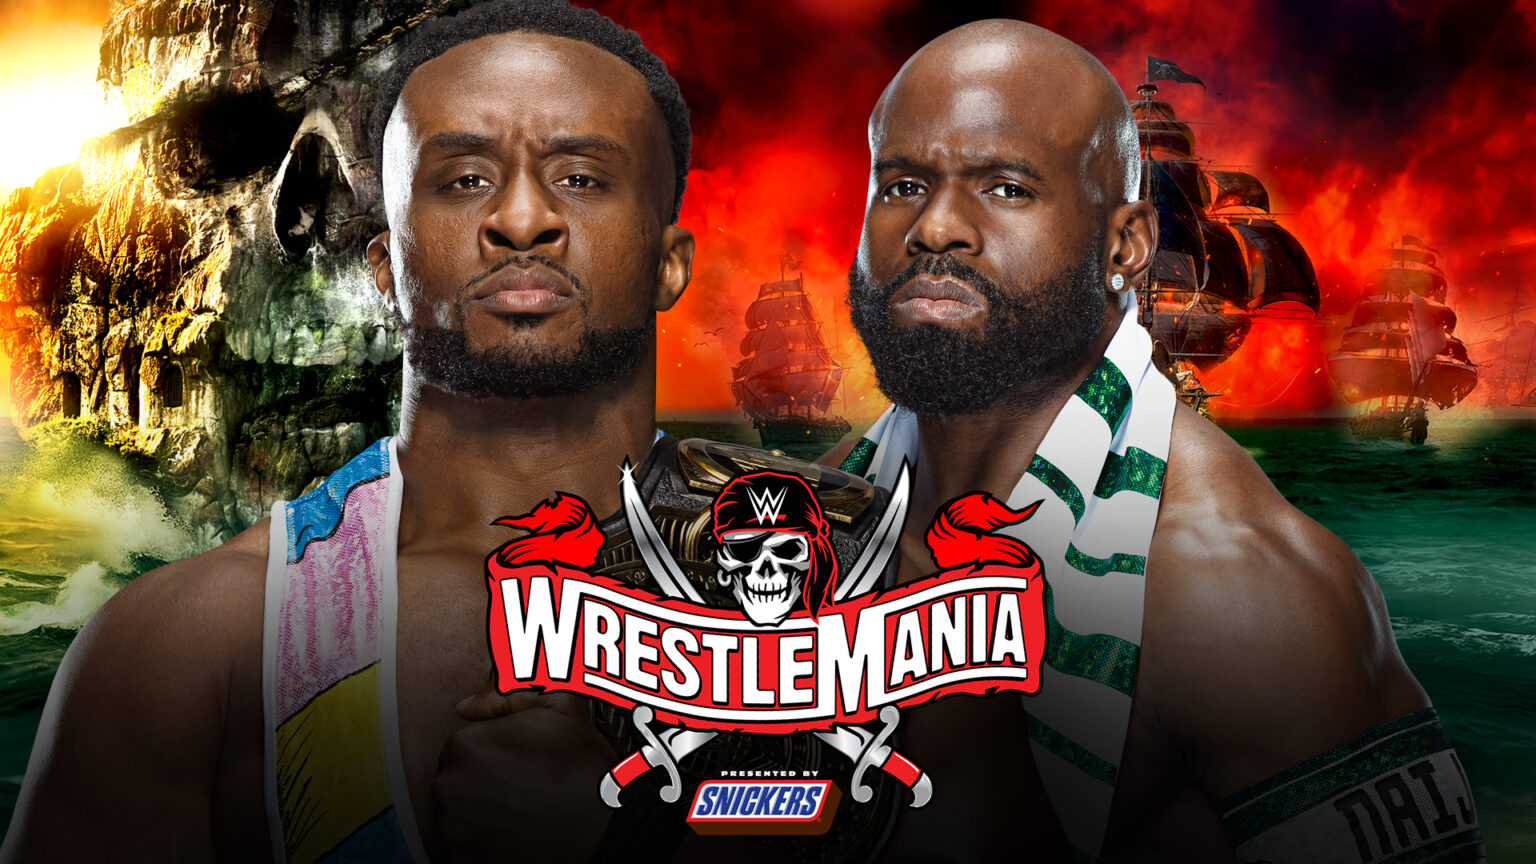 【WWE】IC王座戦 ナイジェリア・ドラム戦 ビッグE vs アポロ・クルーズ 【4.11 フロリダ州タンパ】